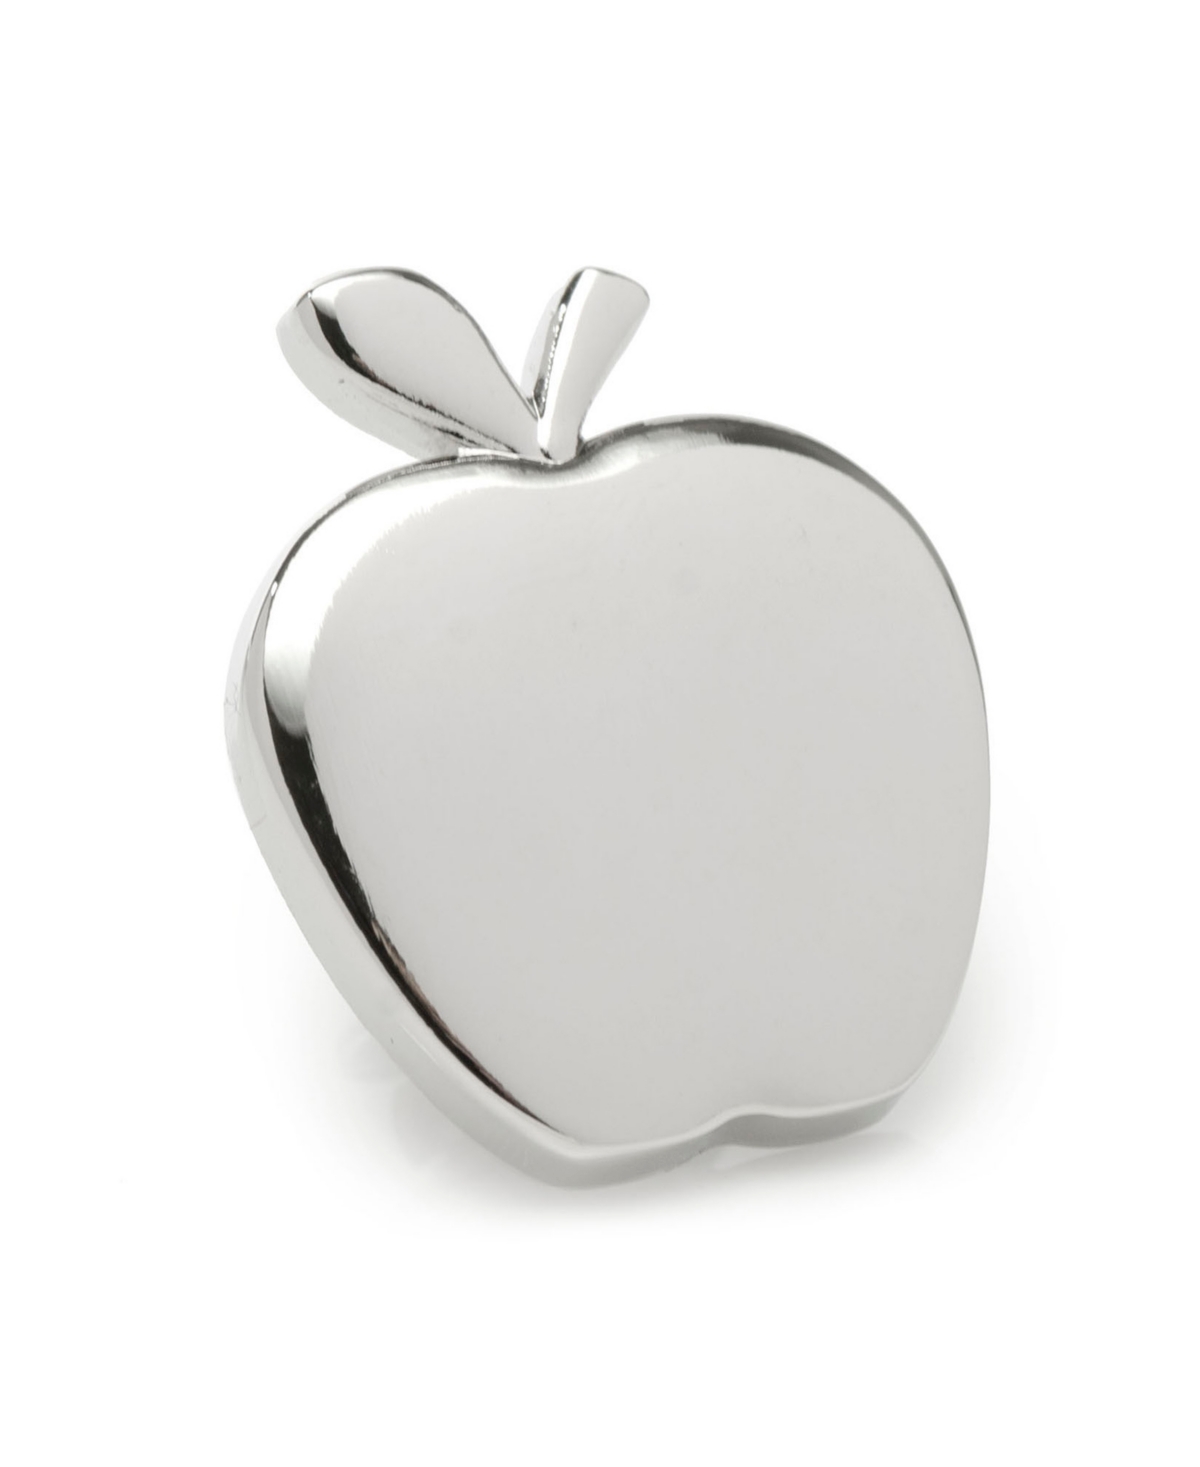 Men's Apple Lapel Pin - Silver-Tone